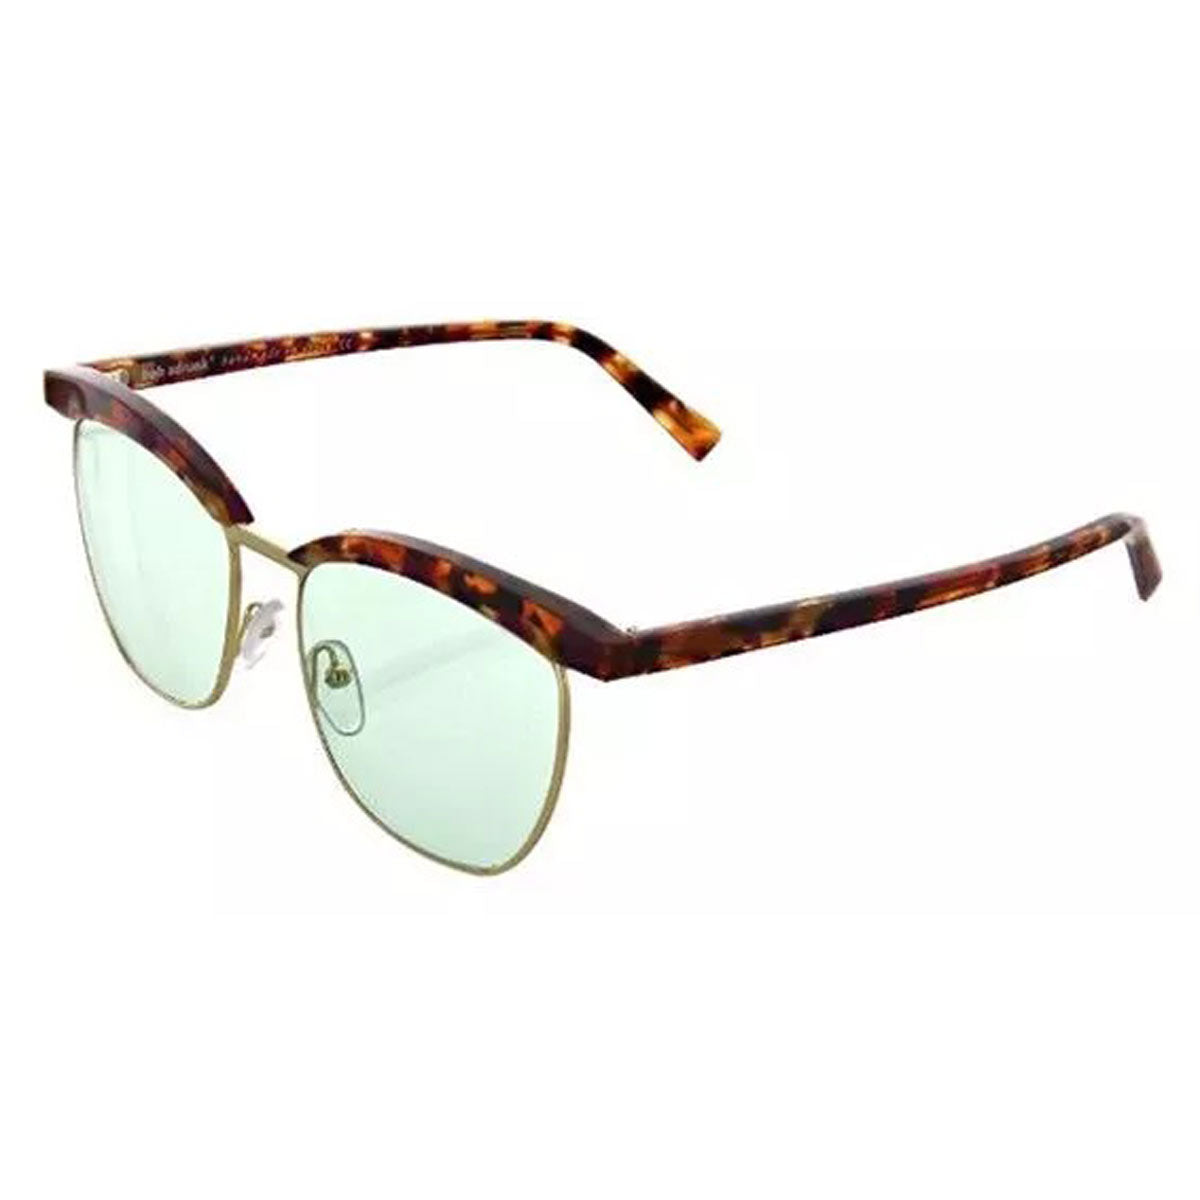 Bob Sdrunk Women's Sunglasses - Grace Light Green Solid Lens / GRACE-54-LG-54-17-145